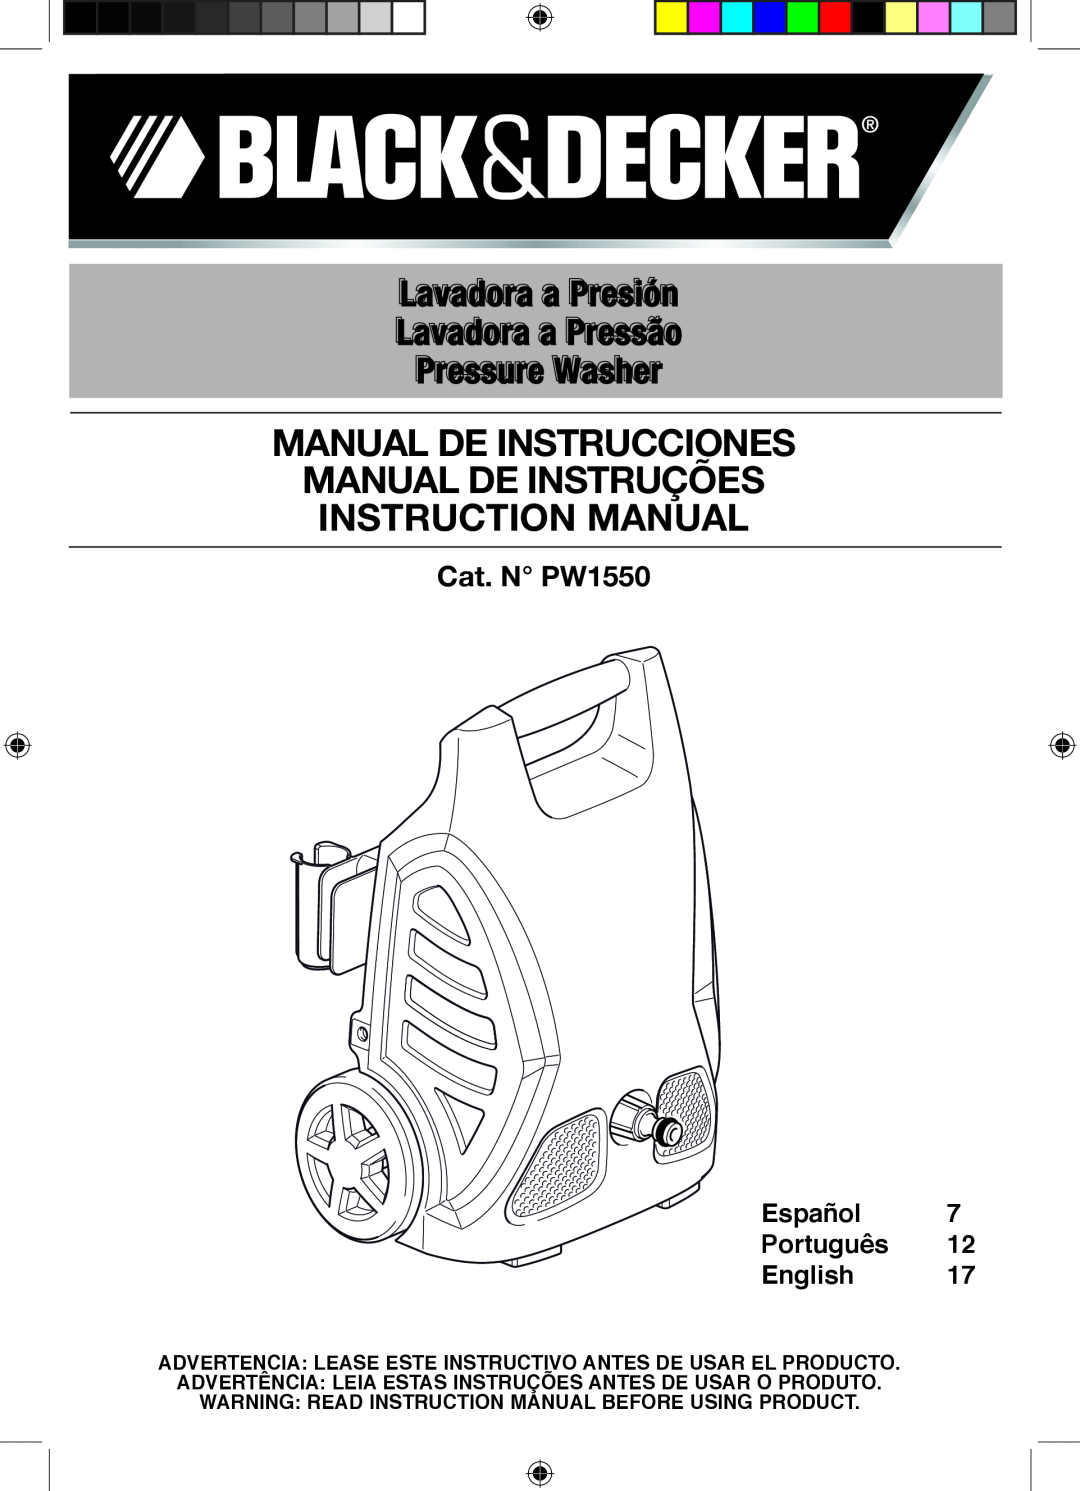 Black & Decker instruction manual Cat. N PW1550, Manual De Instrucciones Manual De Instruções Instruction Manual 